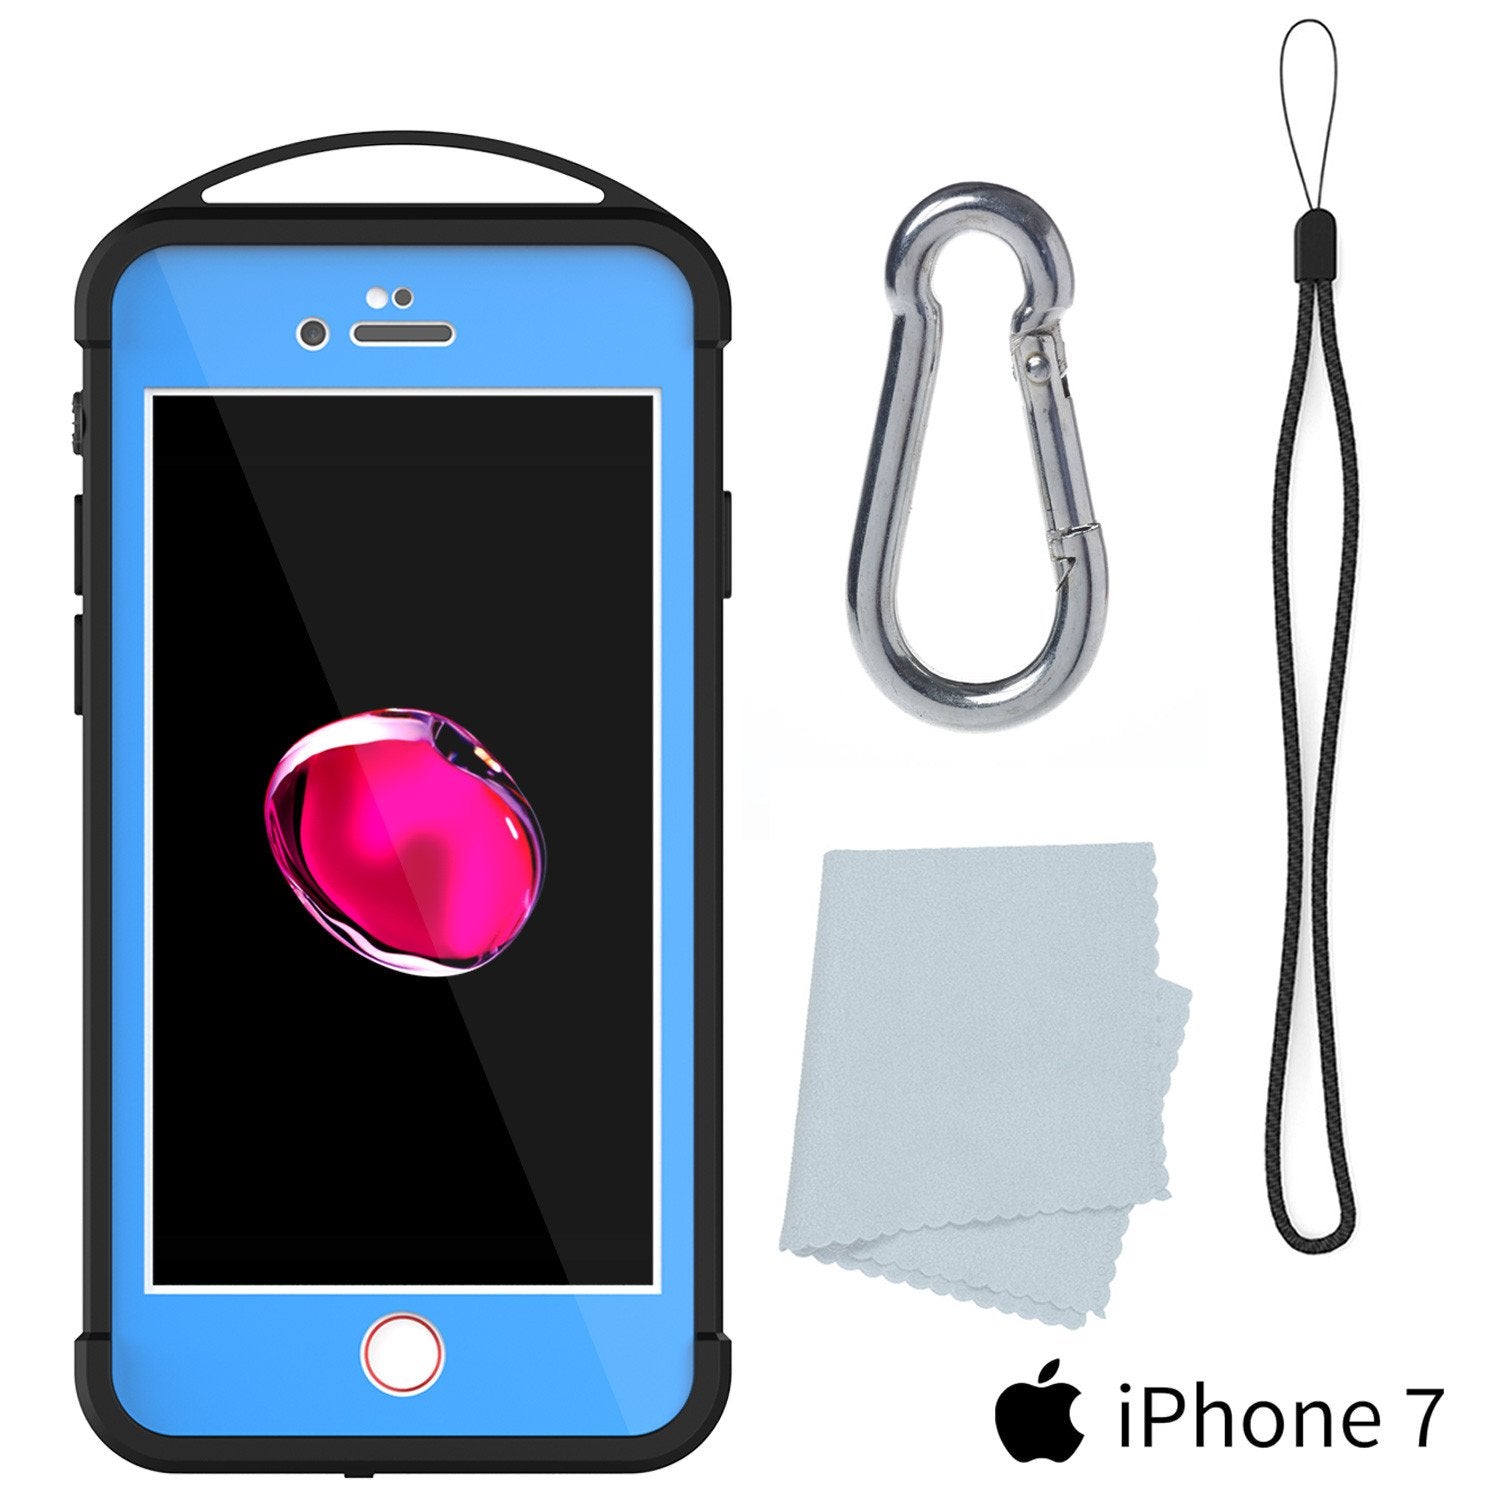 iPhone 7 Waterproof Case, Punkcase ALPINE Series, Light Blue | Heavy Duty Armor Cover